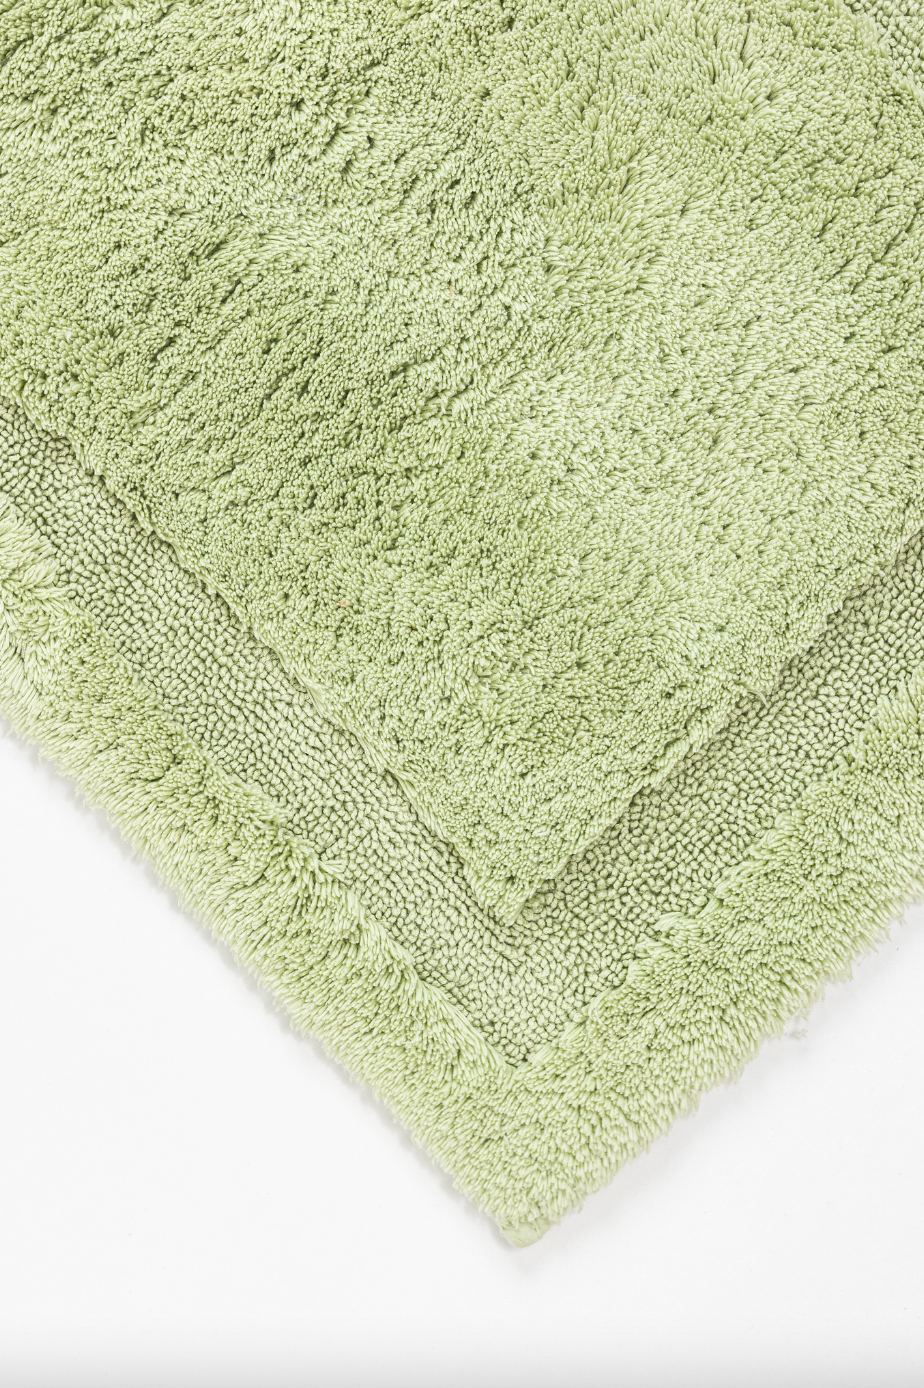 How to Create a Non-Slip Bath Mat from a Cotton Rug